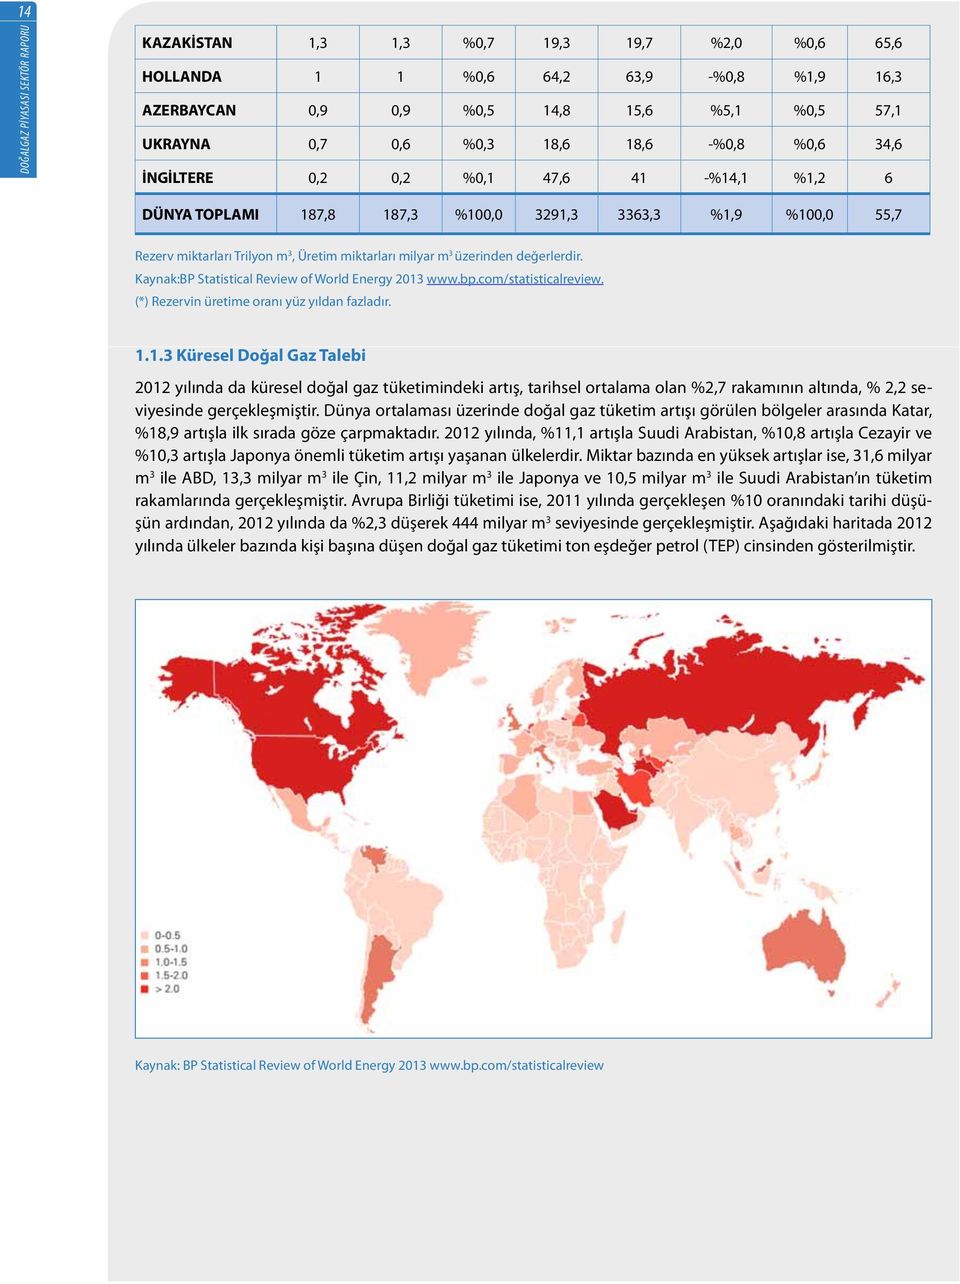 Kaynak:BP Statistical Review of World Energy 2013